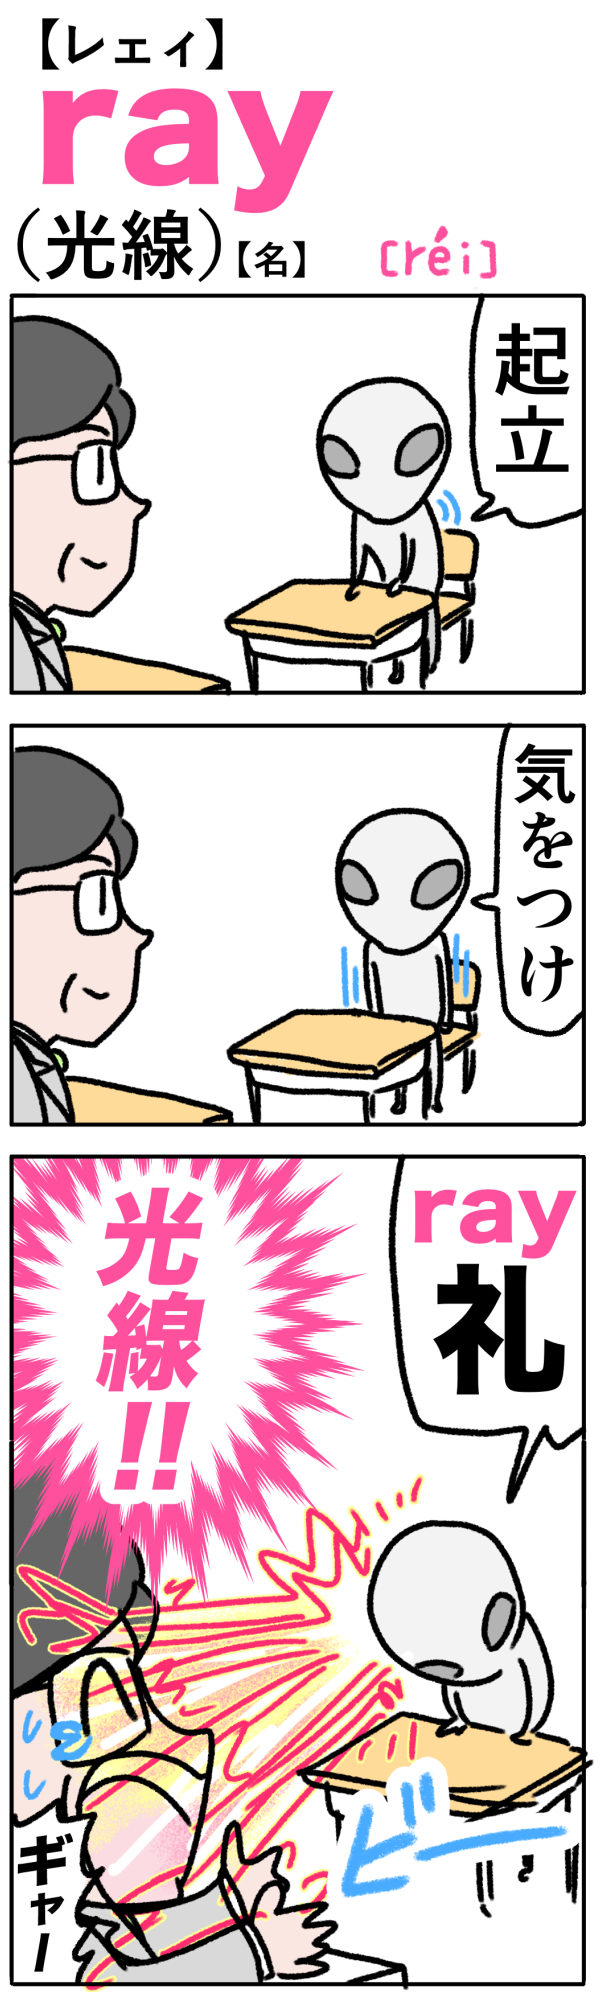 ray（光線）の語呂合わせ英単語